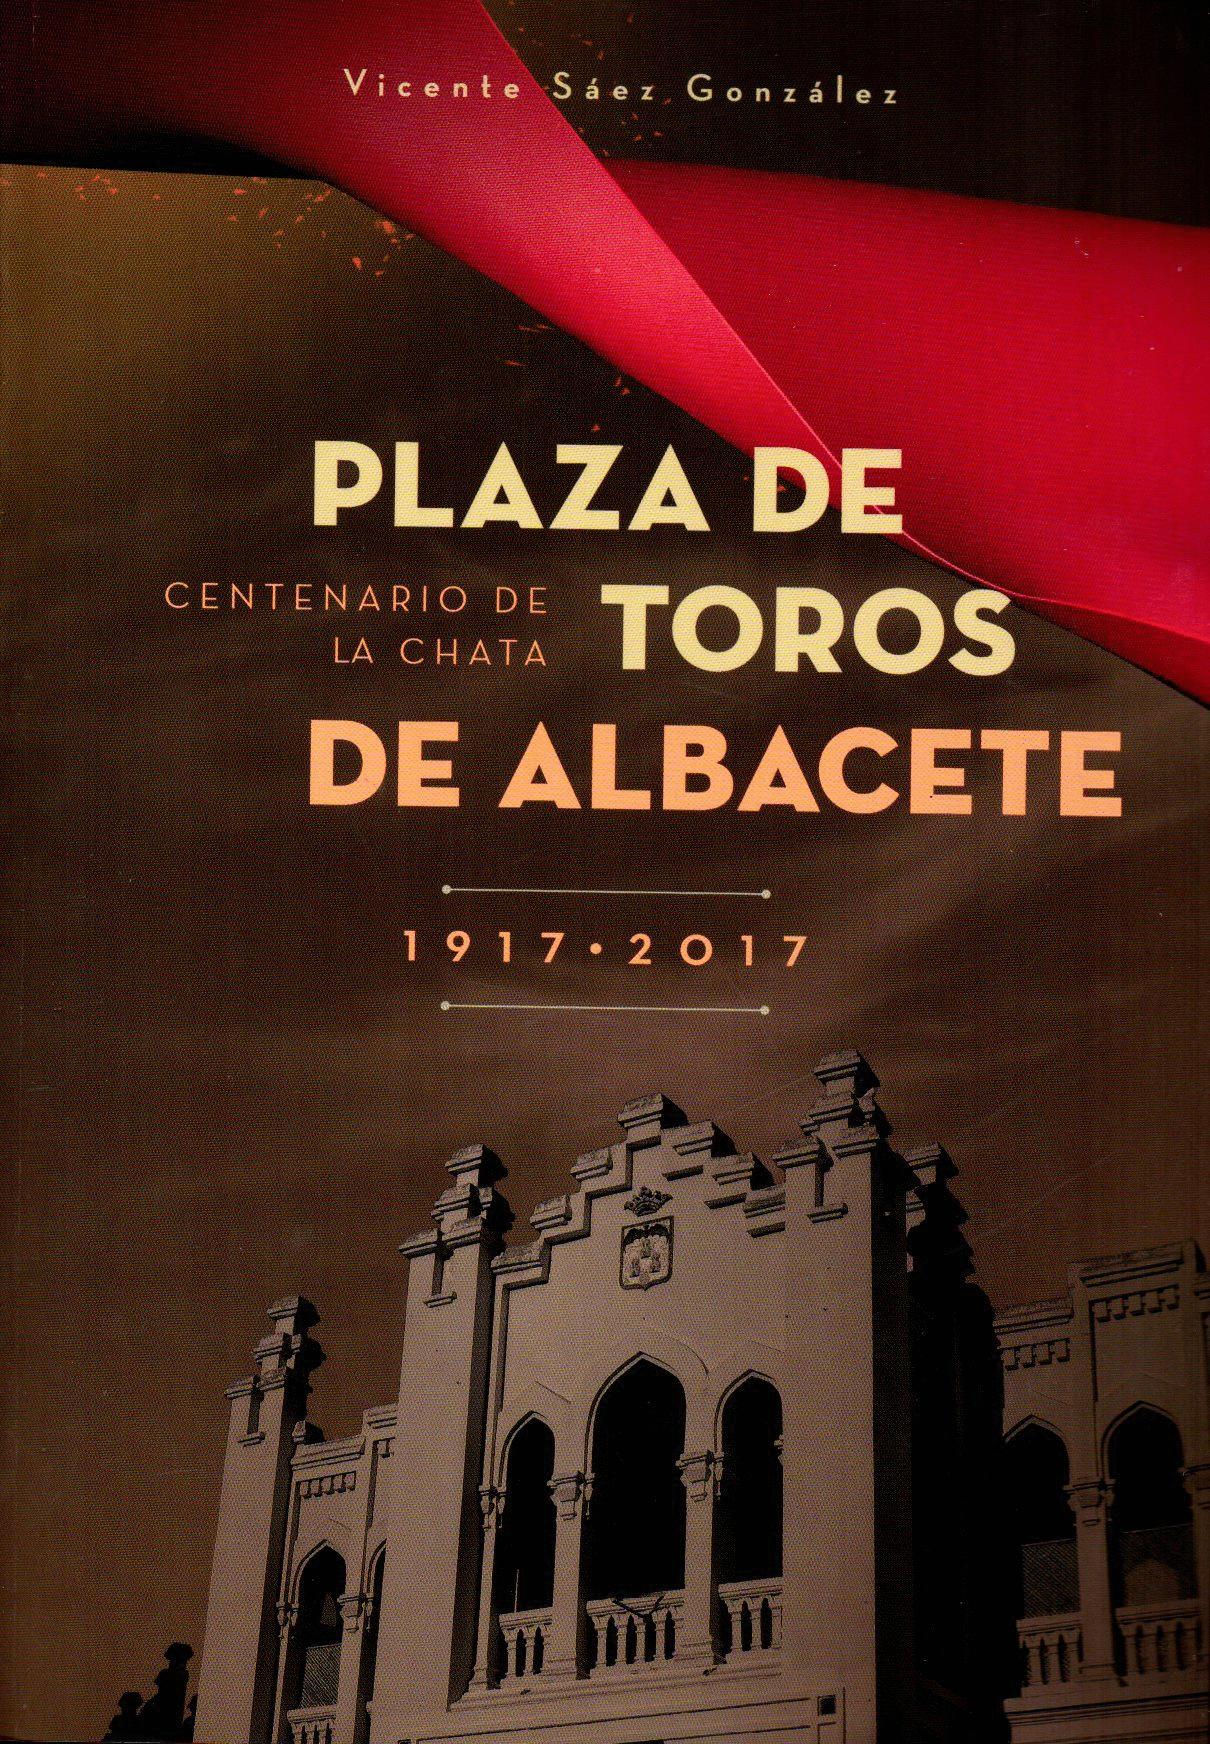 PLAZA DE TOROS DE ALBACETE: CENTENARIO DE LA CHATA (1917-2017)